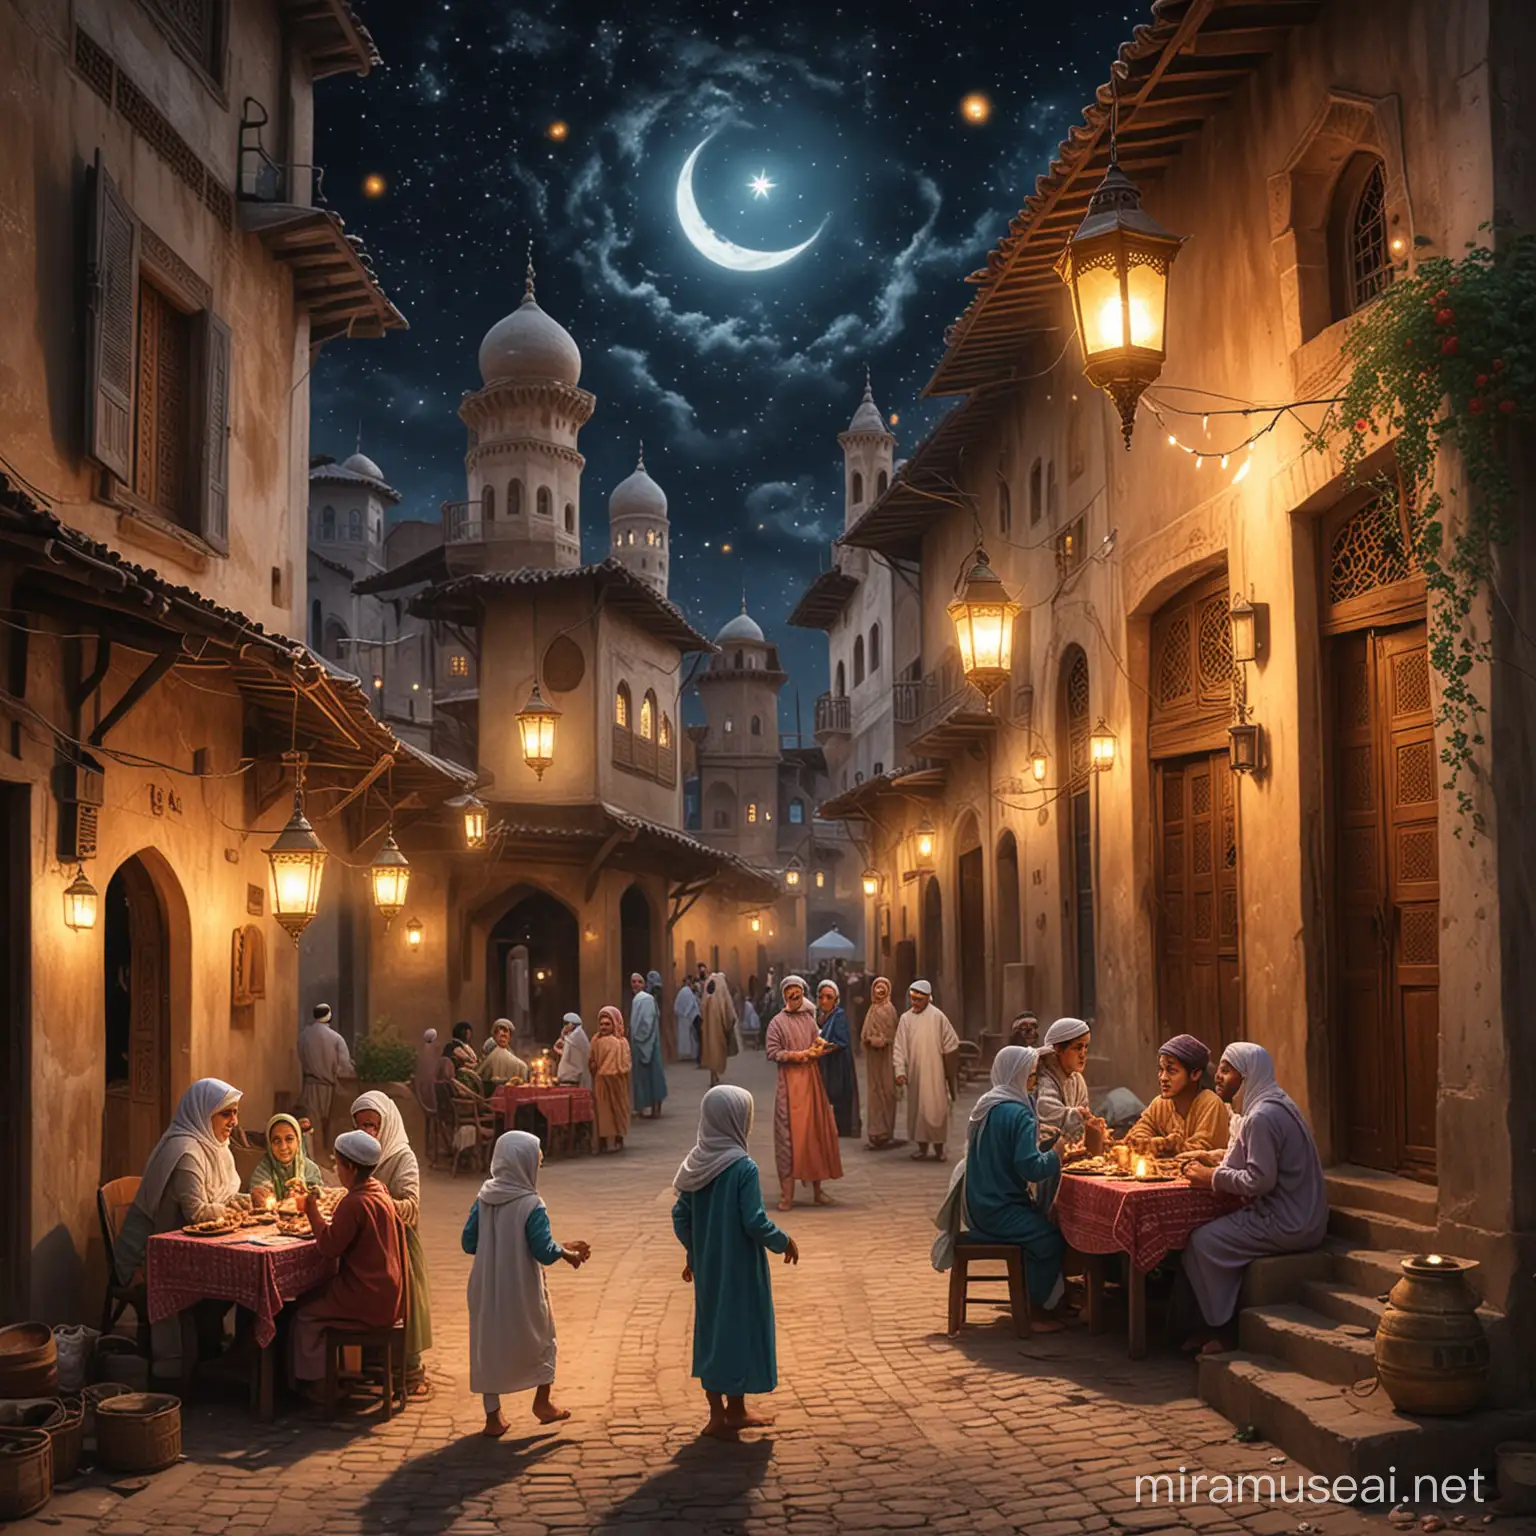 Ramadan Celebration Joyful Iftar Gathering Amidst Lanternlit Old Houses